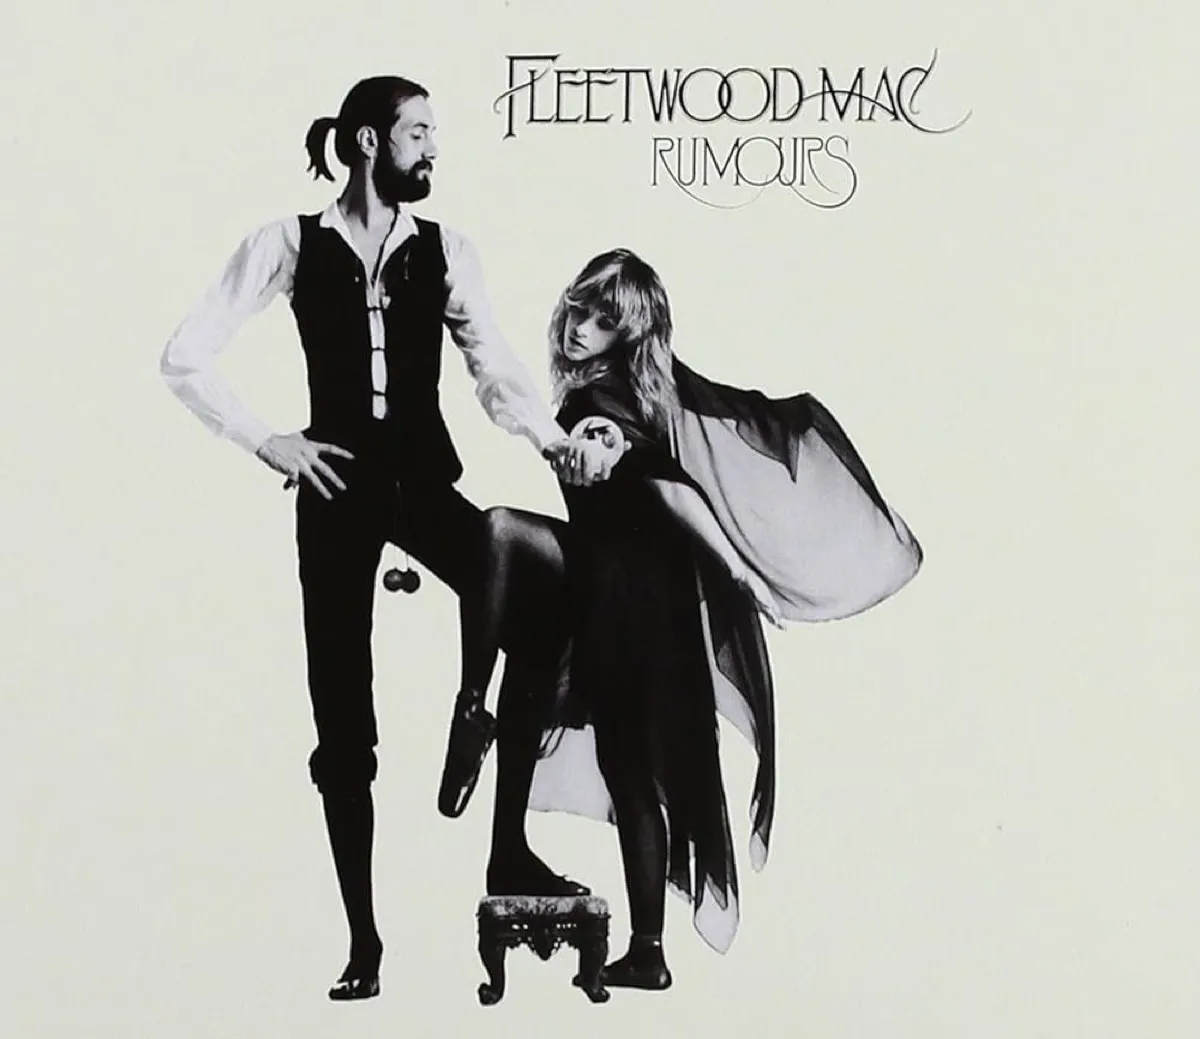 "Rumours" by Fleetwood Mac album cover